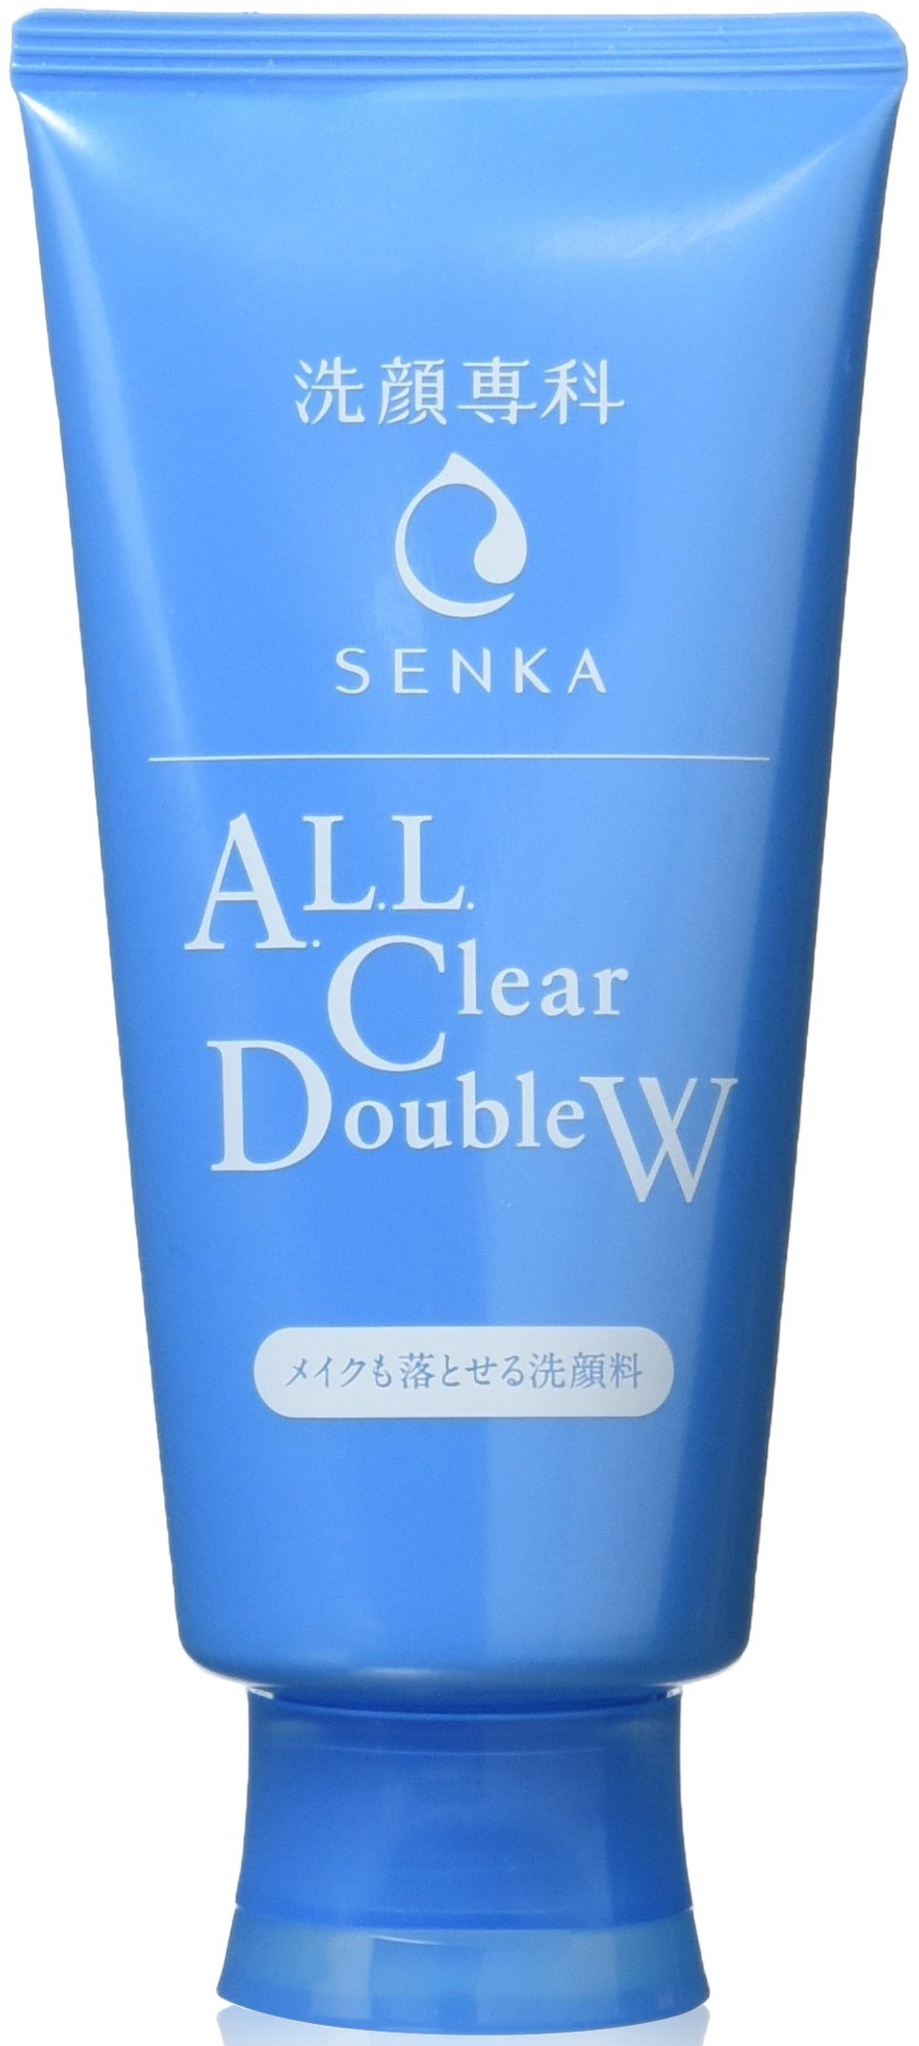 Senka All Clear Double W